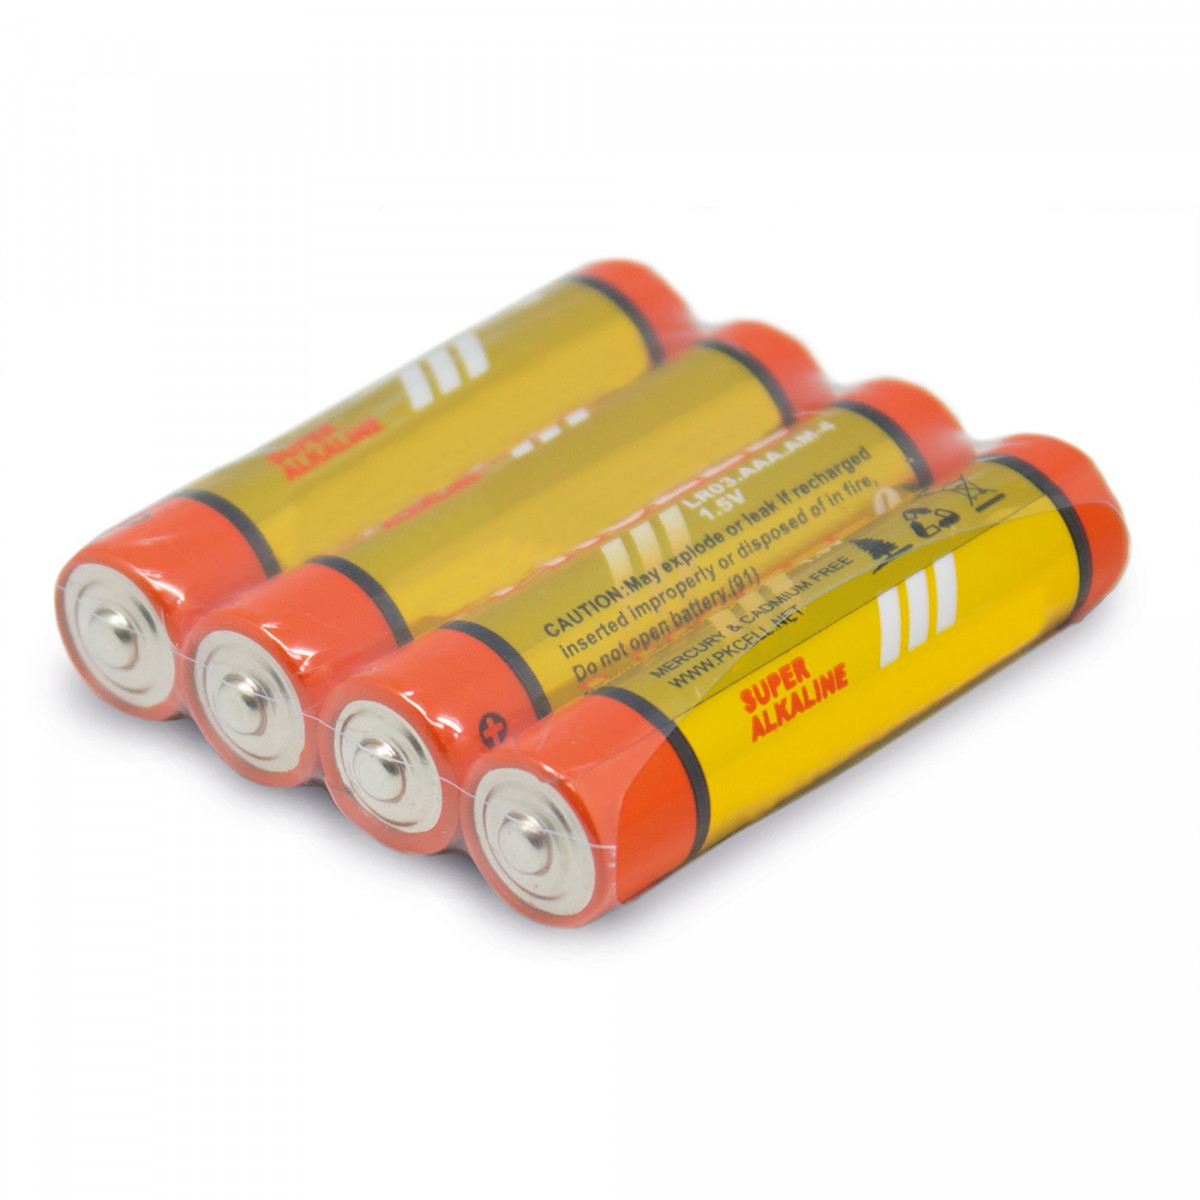 Batterie alcaline r03 aaa